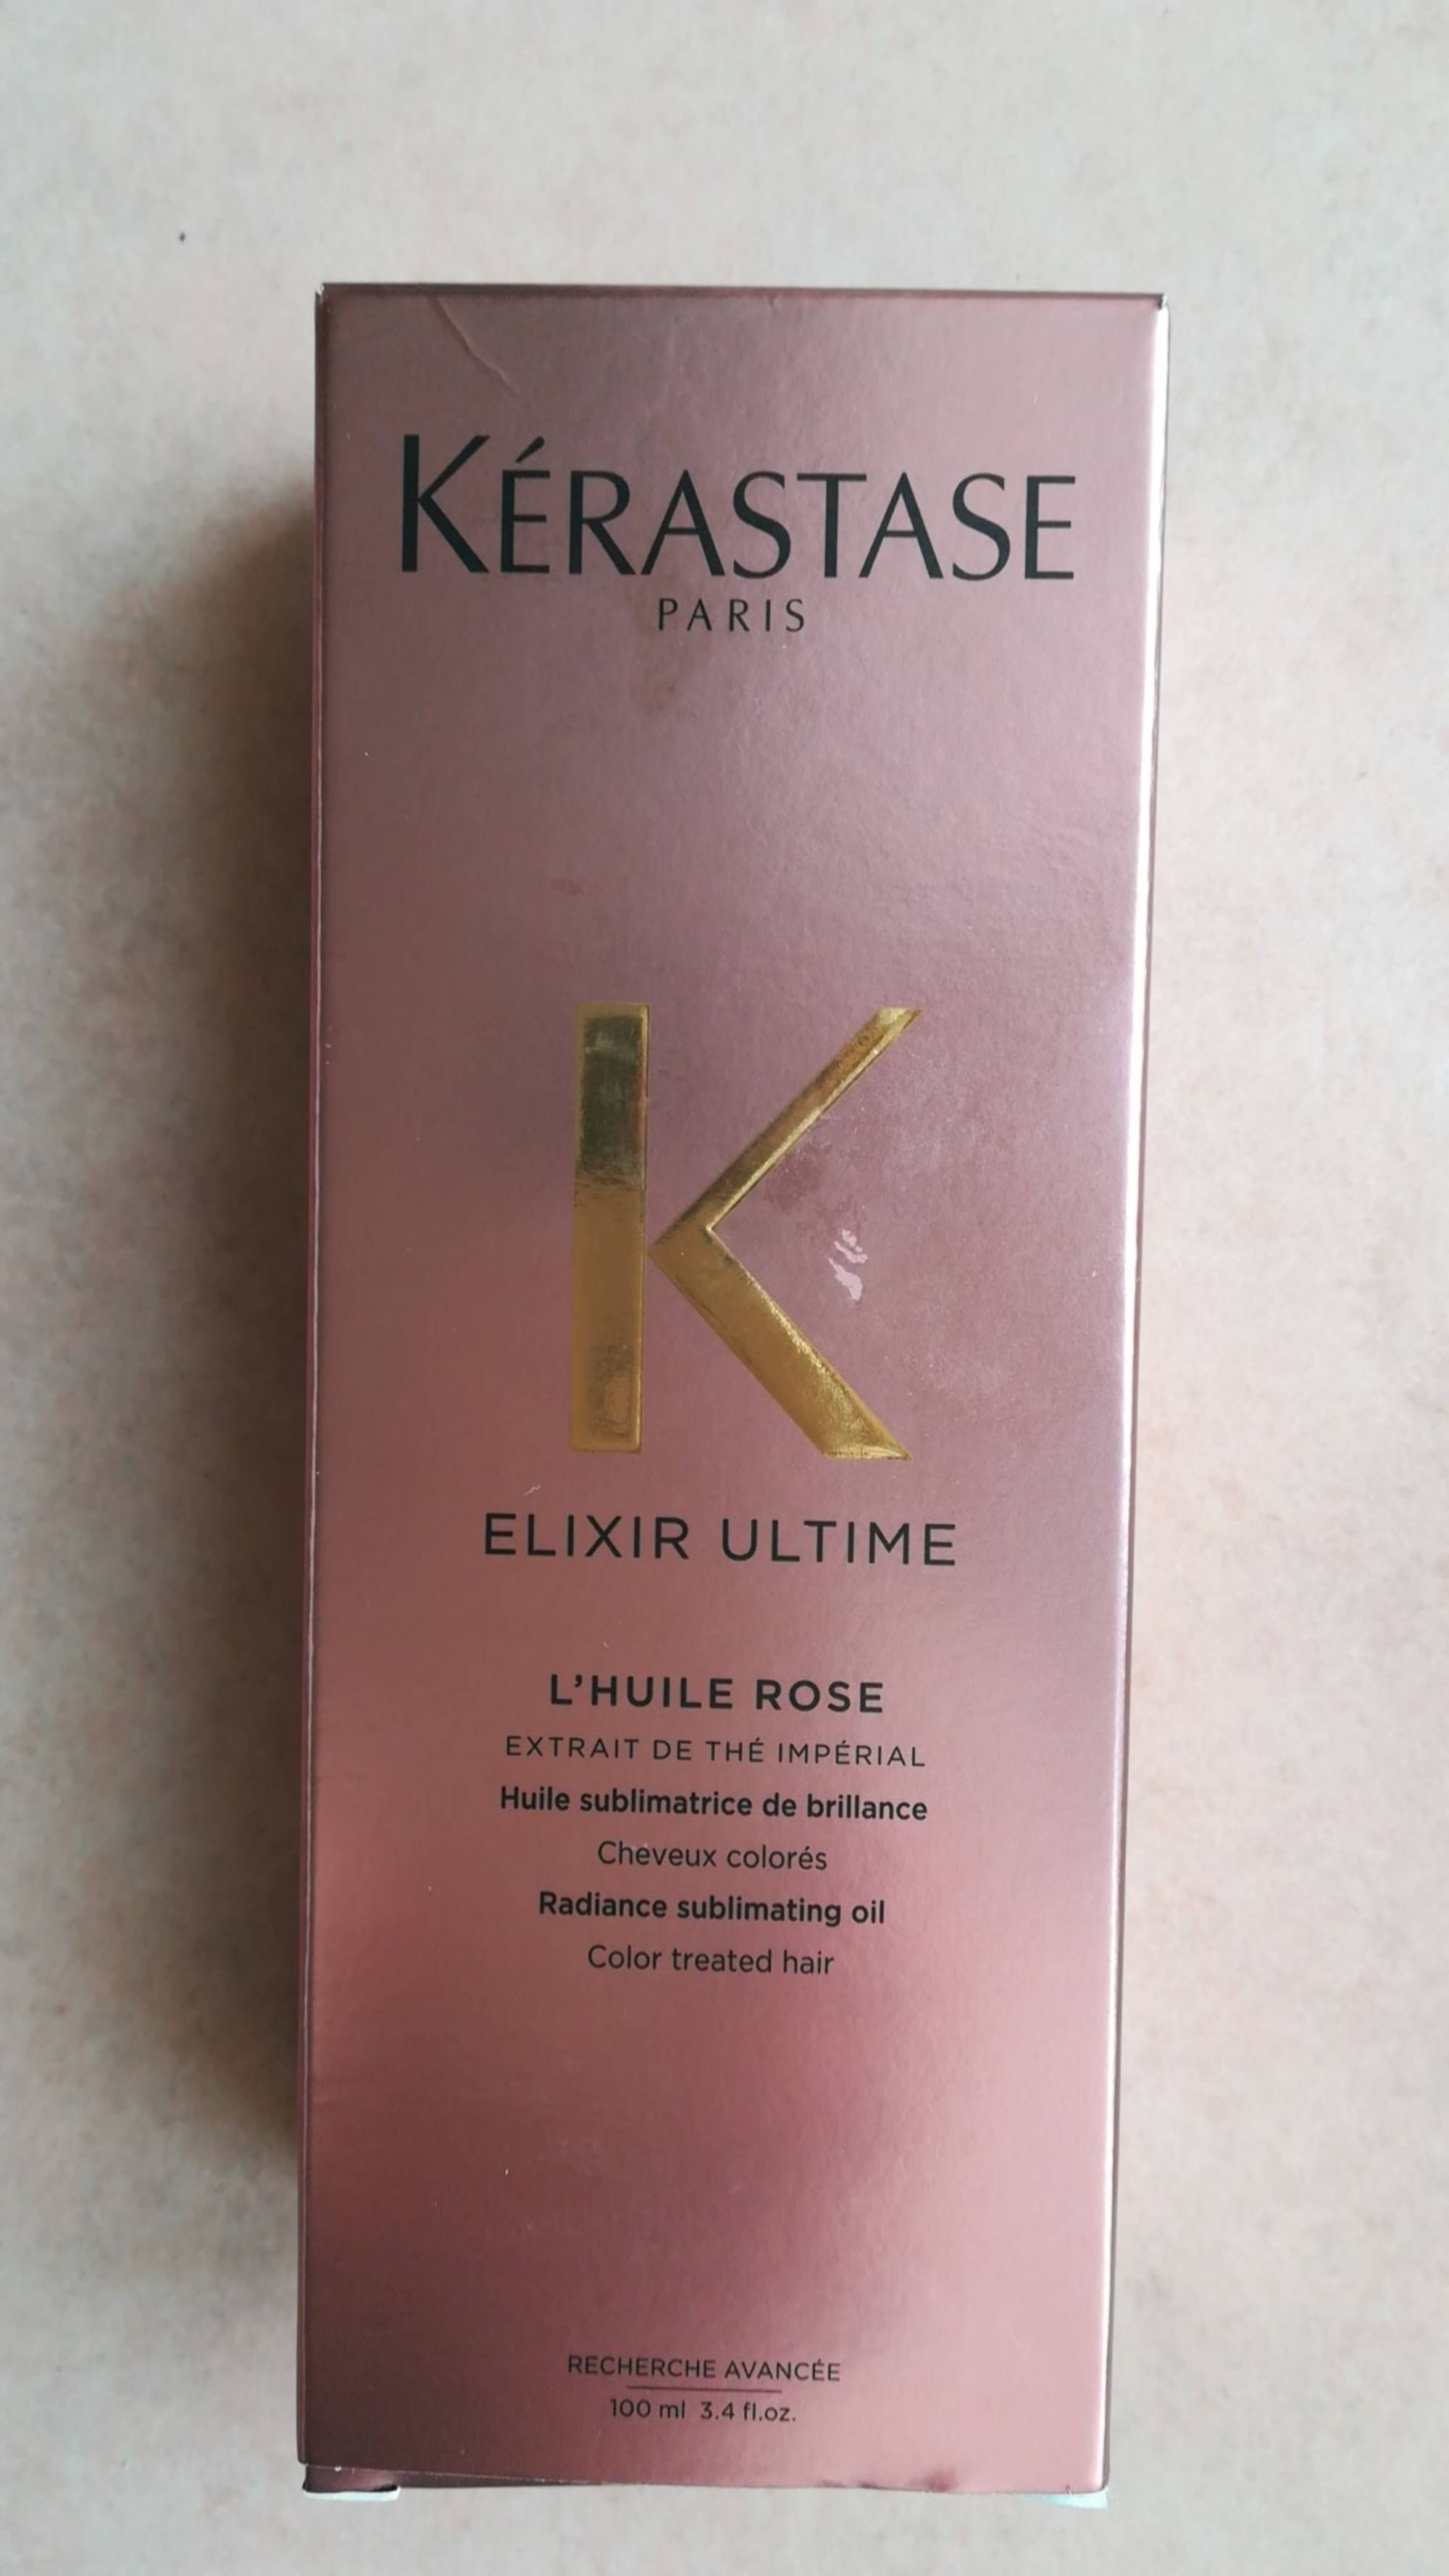 KÉRASTASE - Elixir ultime - L'huile rose